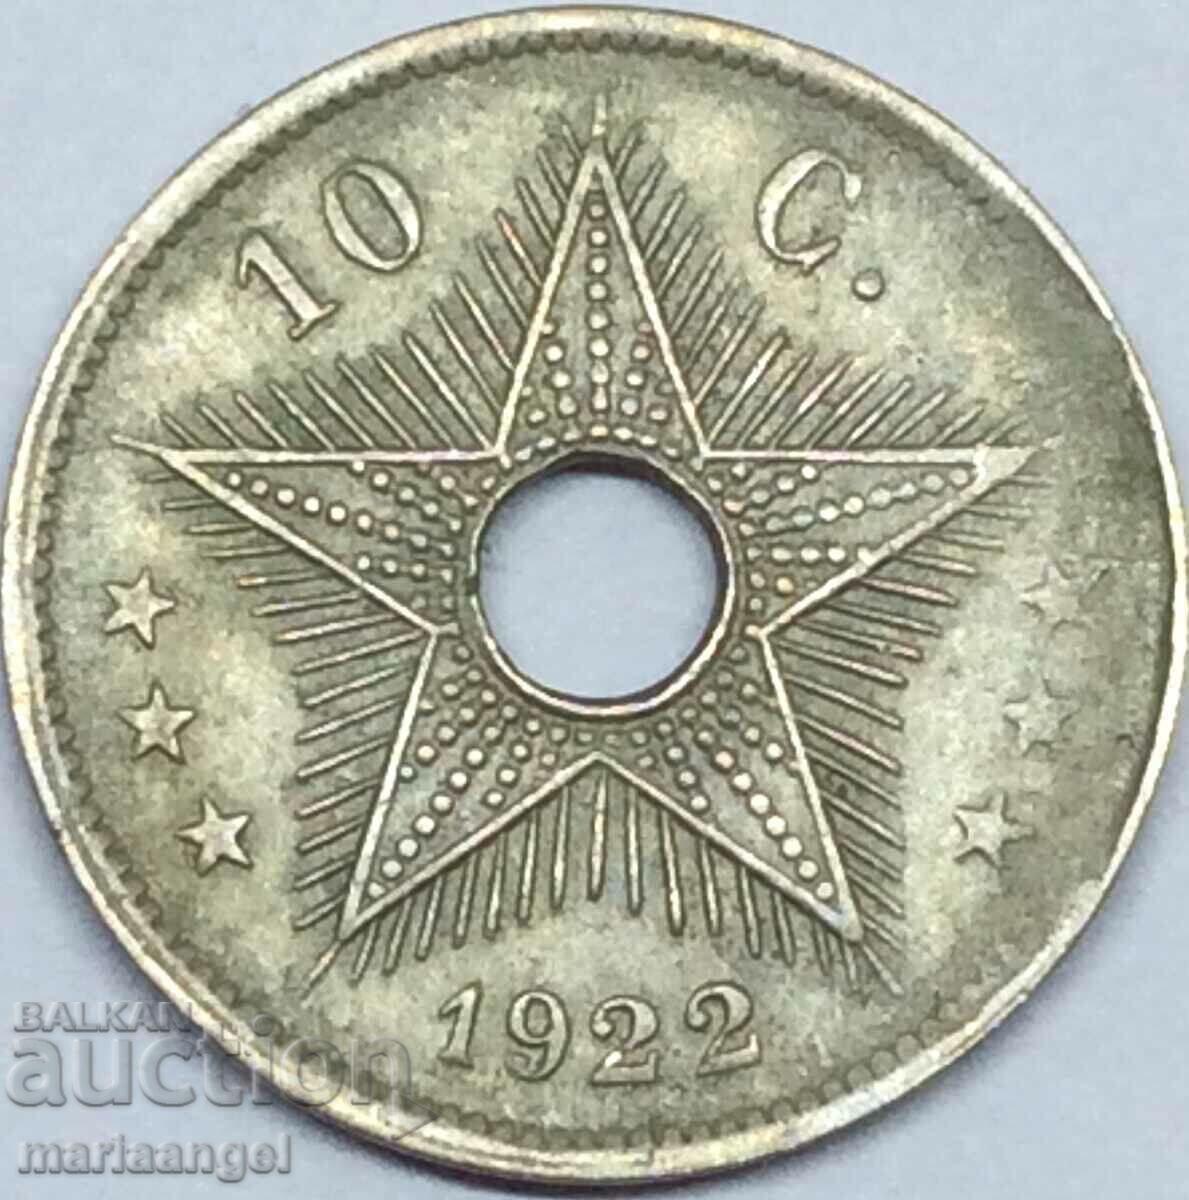 Belgian Congo 1922 10 centimes